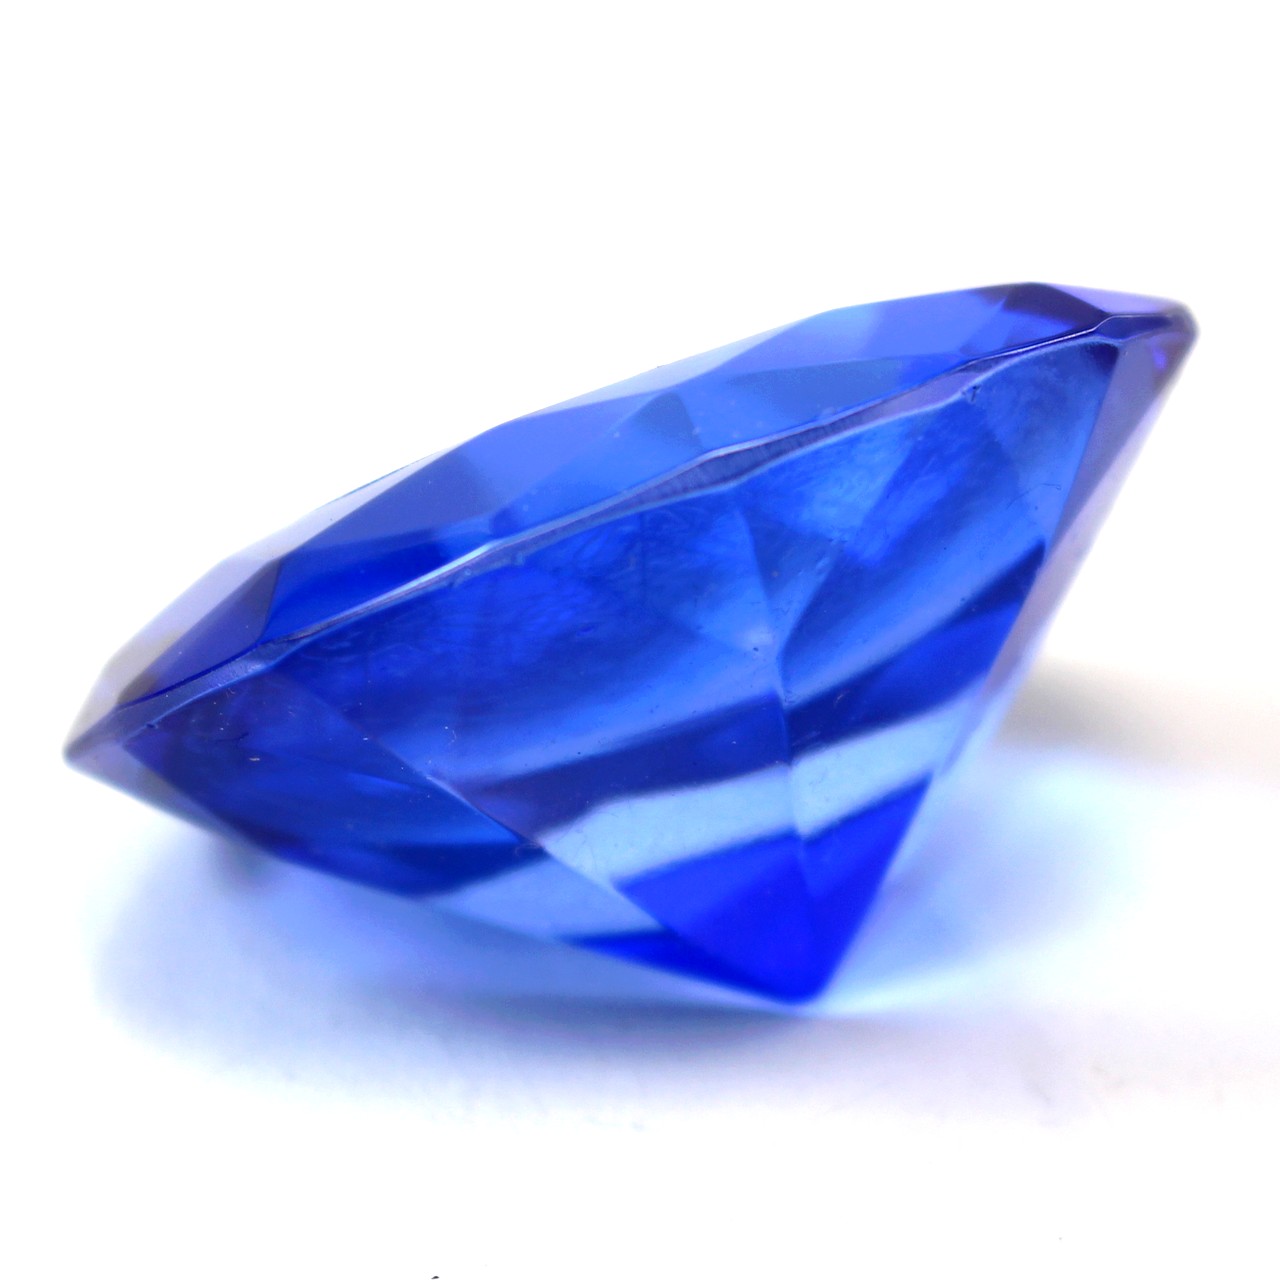 Tachyonen Glas Diamant Sri Yantra blau 45 Energie Heilige Geometrie Michael 6. Chakra